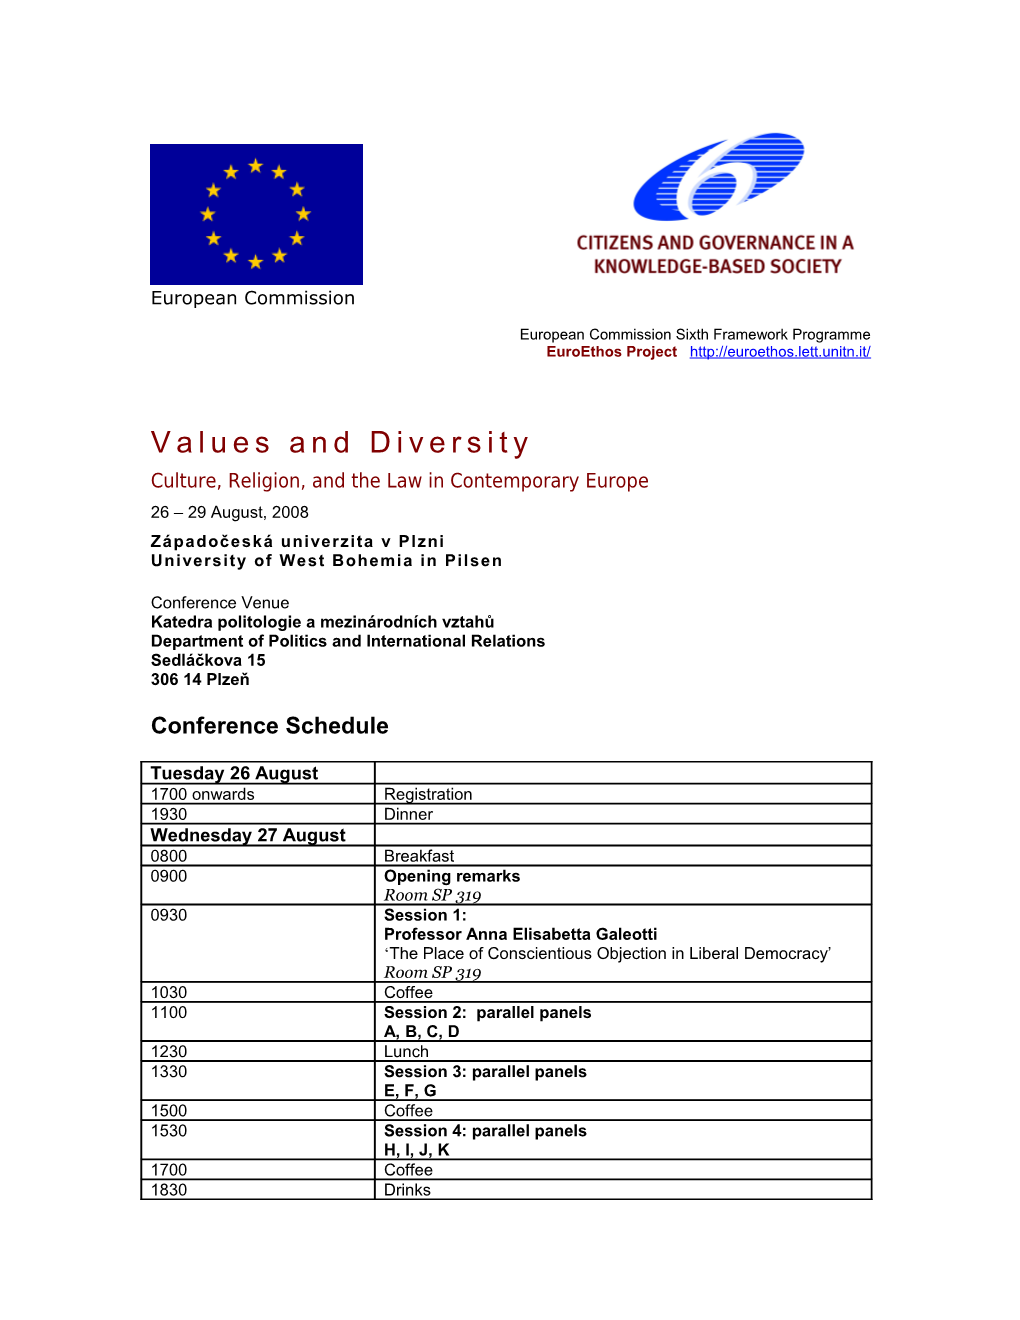 European Commission Sixth Framework Programme